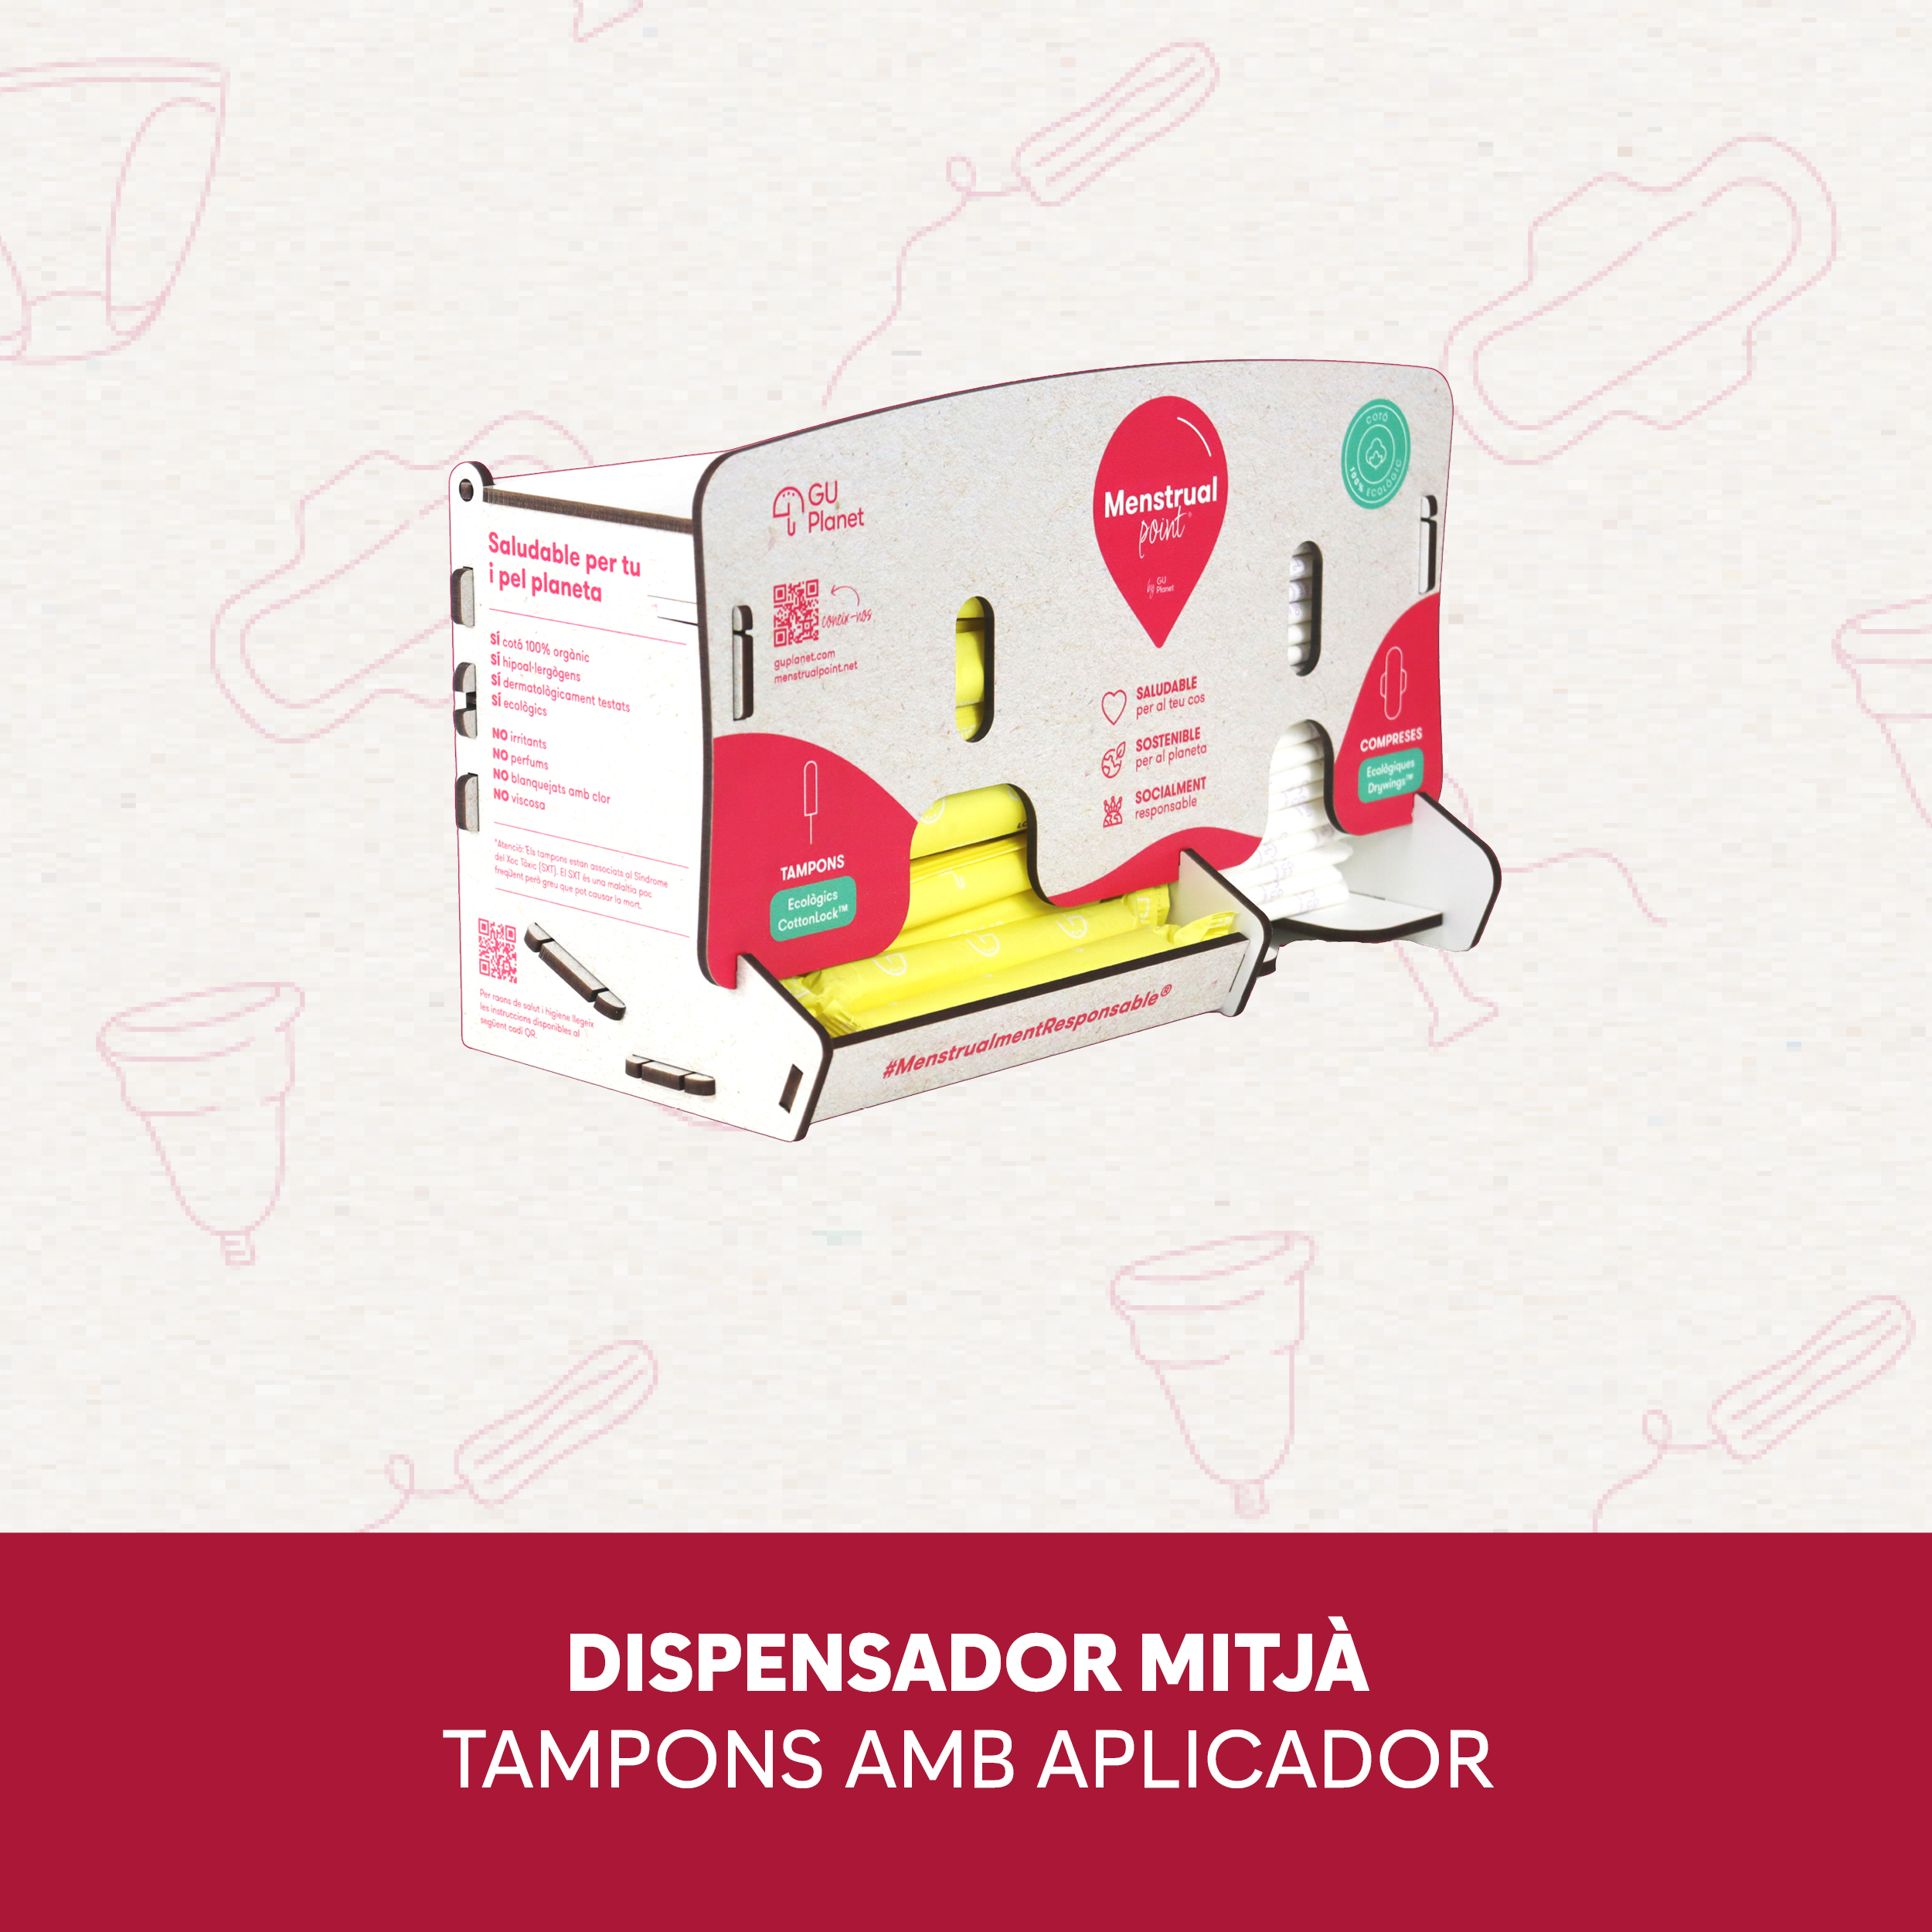 papelmatic-higiene-profesional-guia-para-comprar-productos-higiene-menstrual-point-dispensador-mediano-tampones-con-aplicador-cat